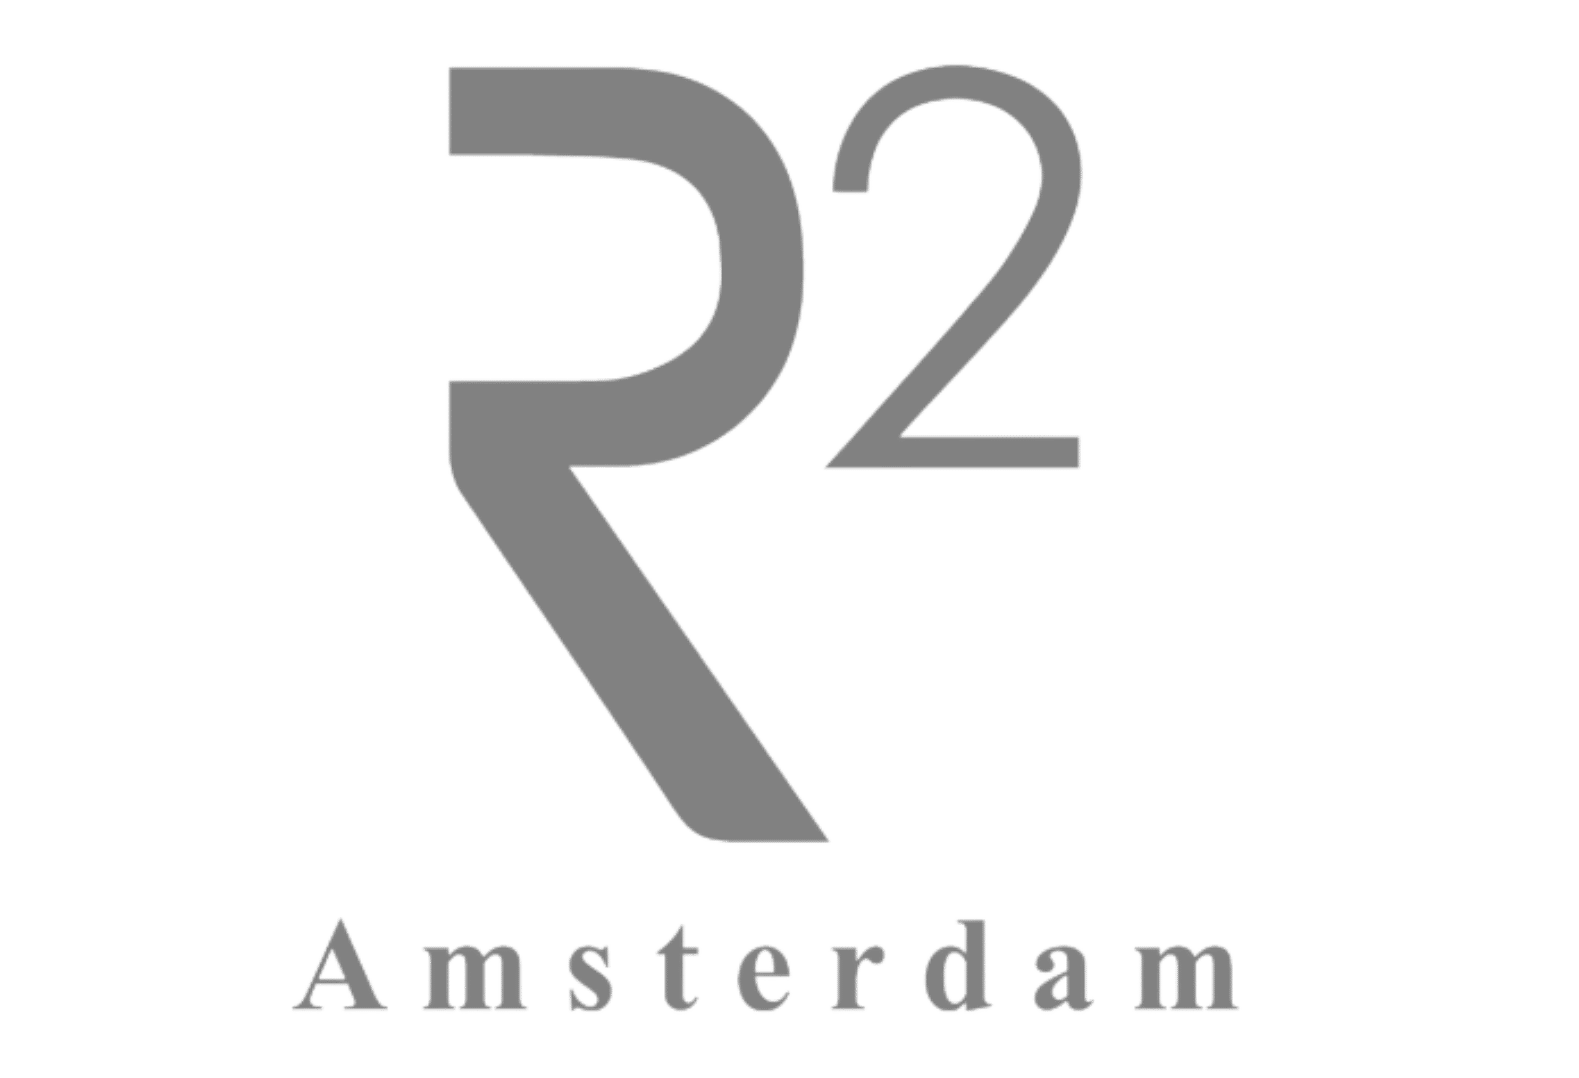 R2 Amsterdam